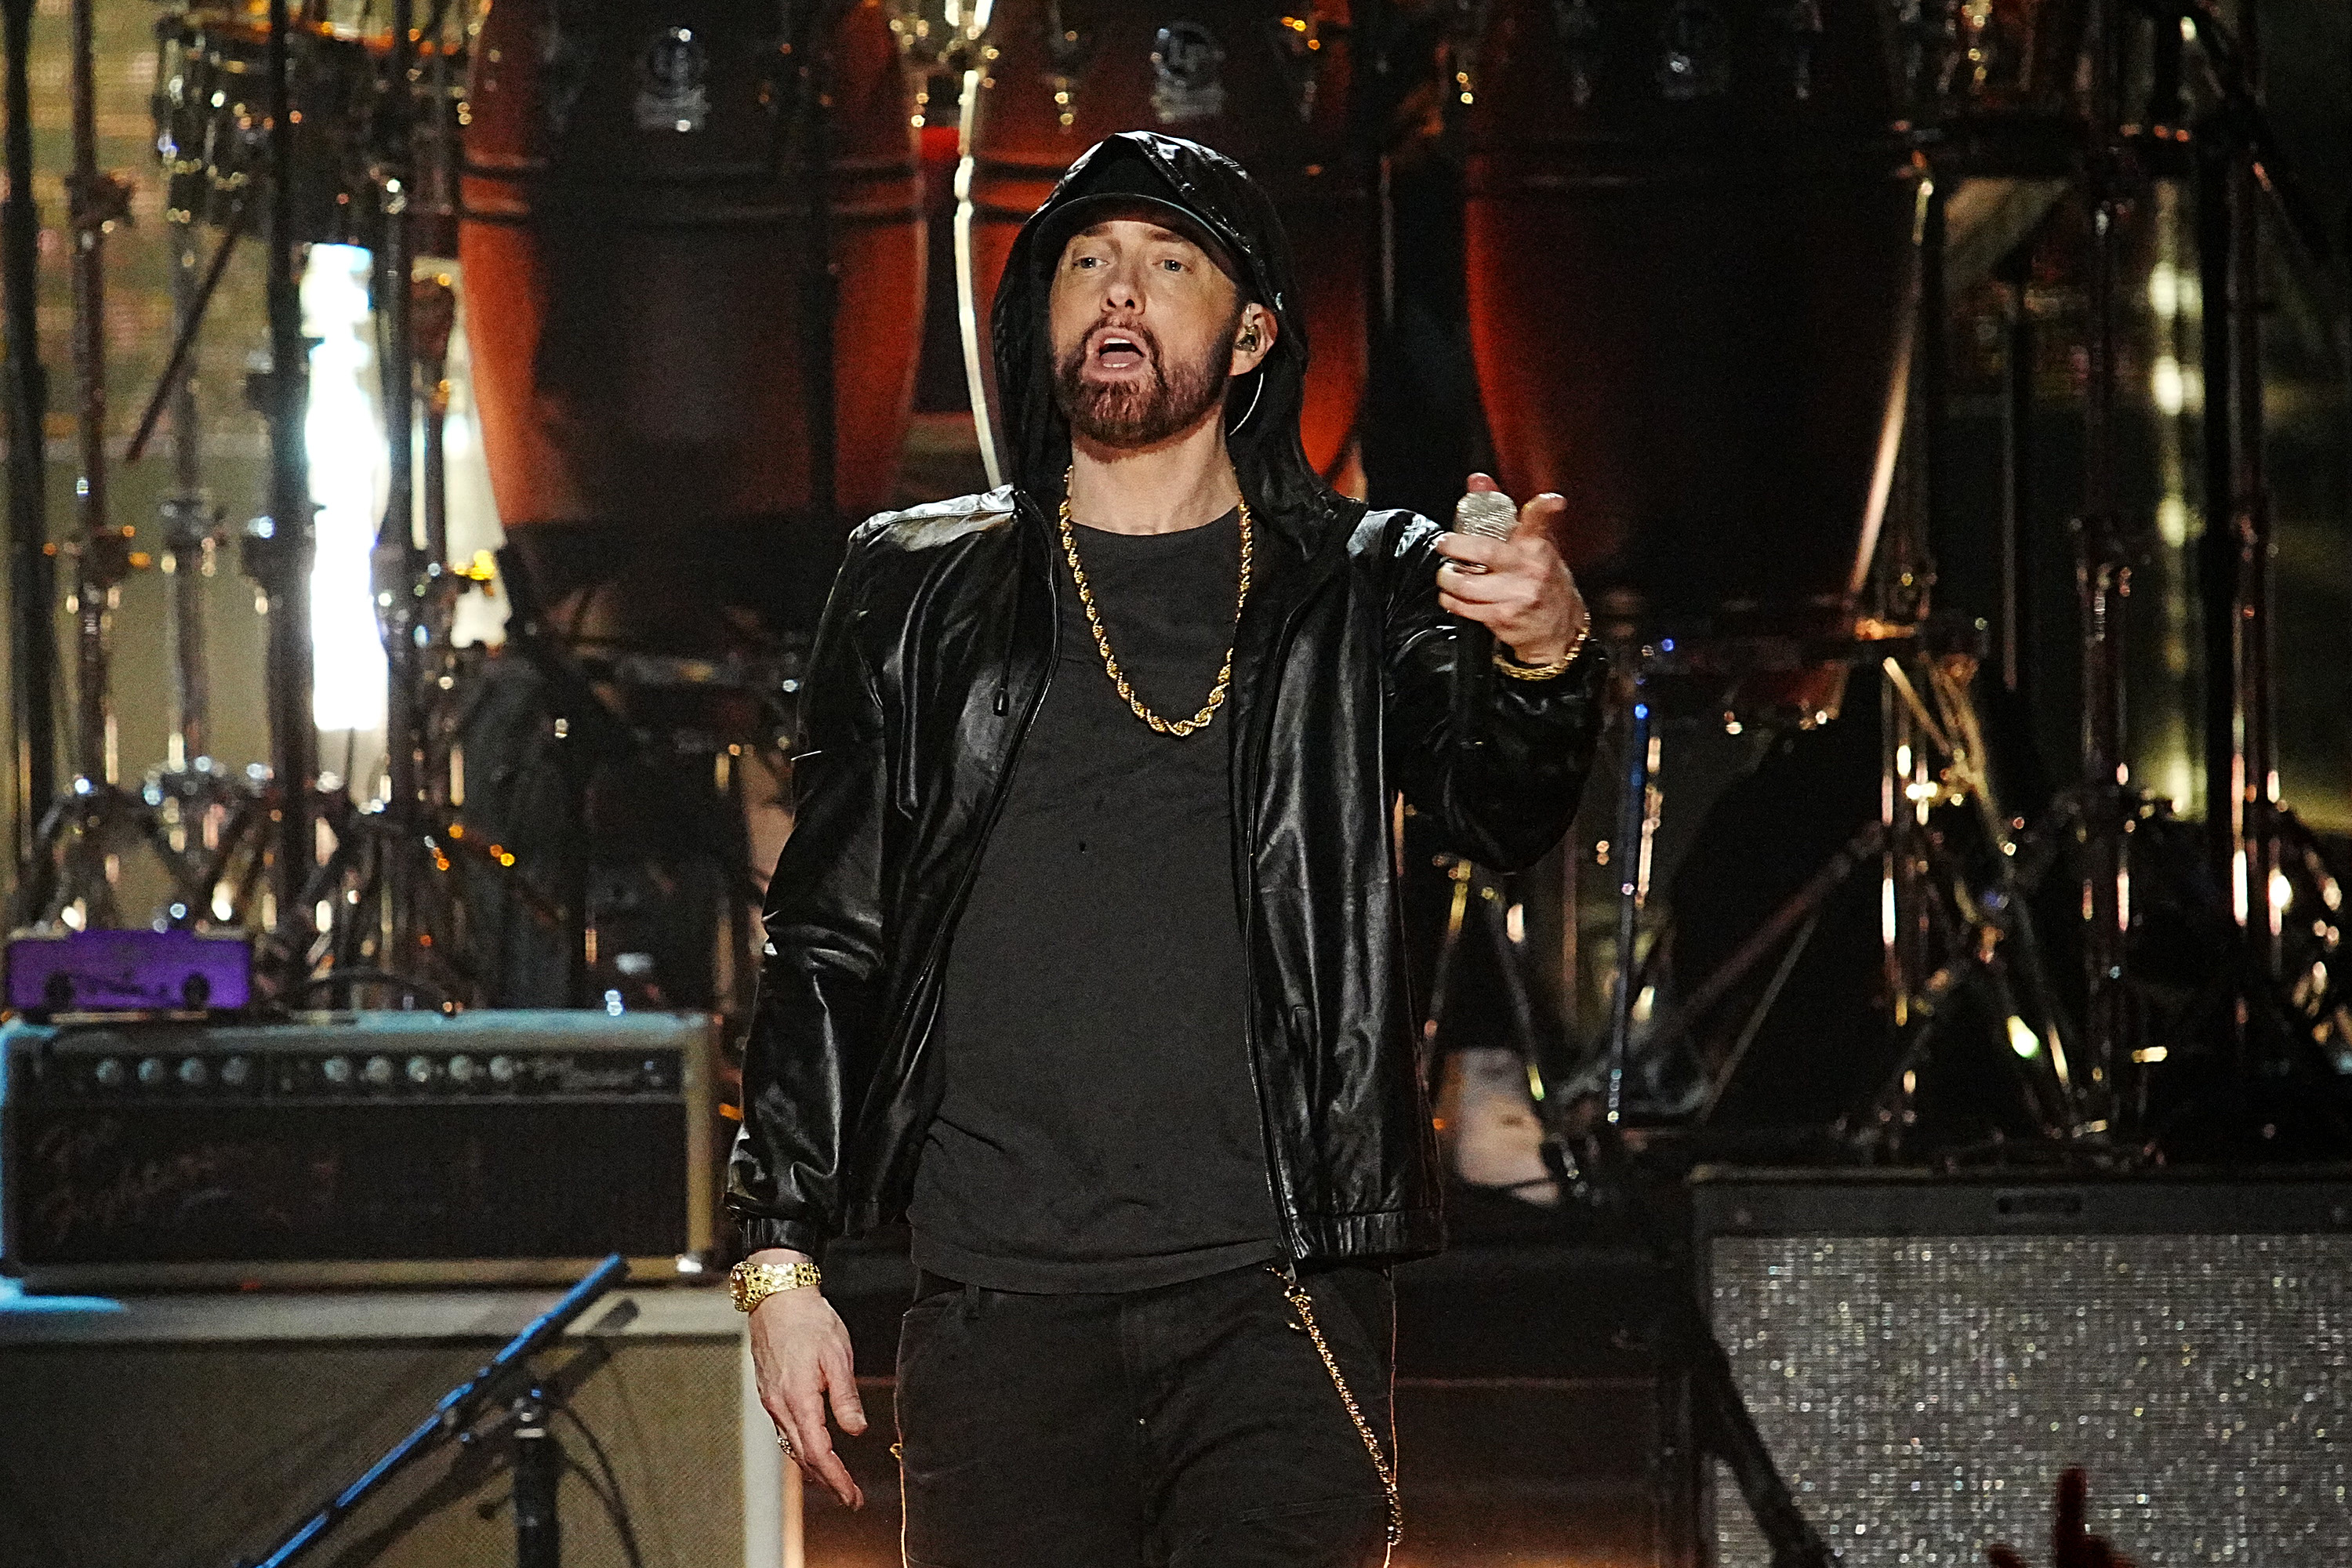 Eminem onstage